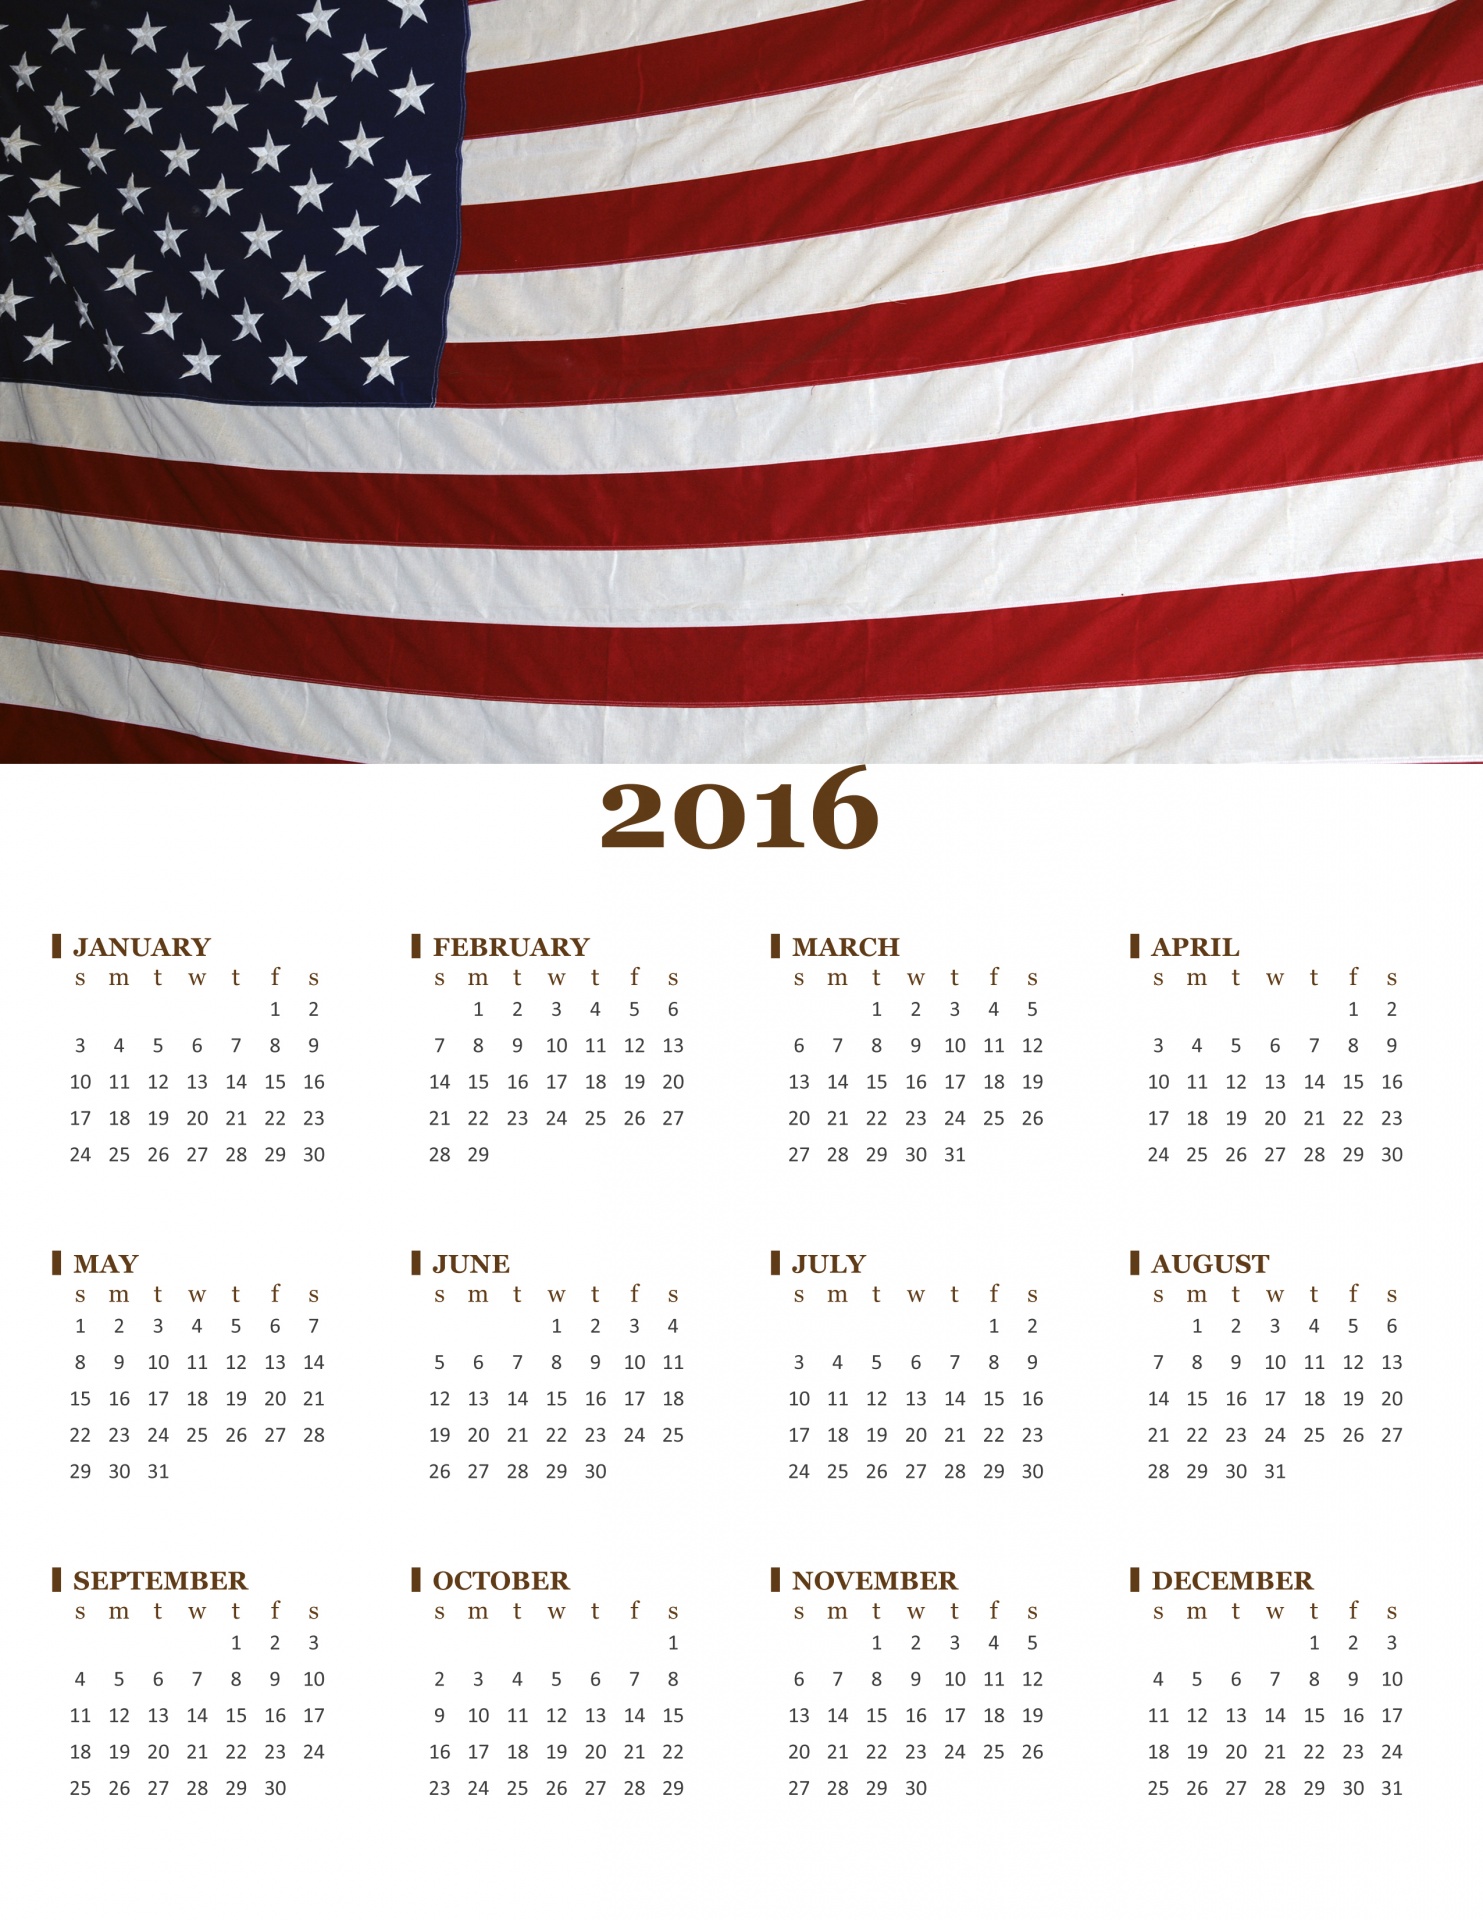 2016 Annual American Flag Calendar Free Stock Photo Public Domain